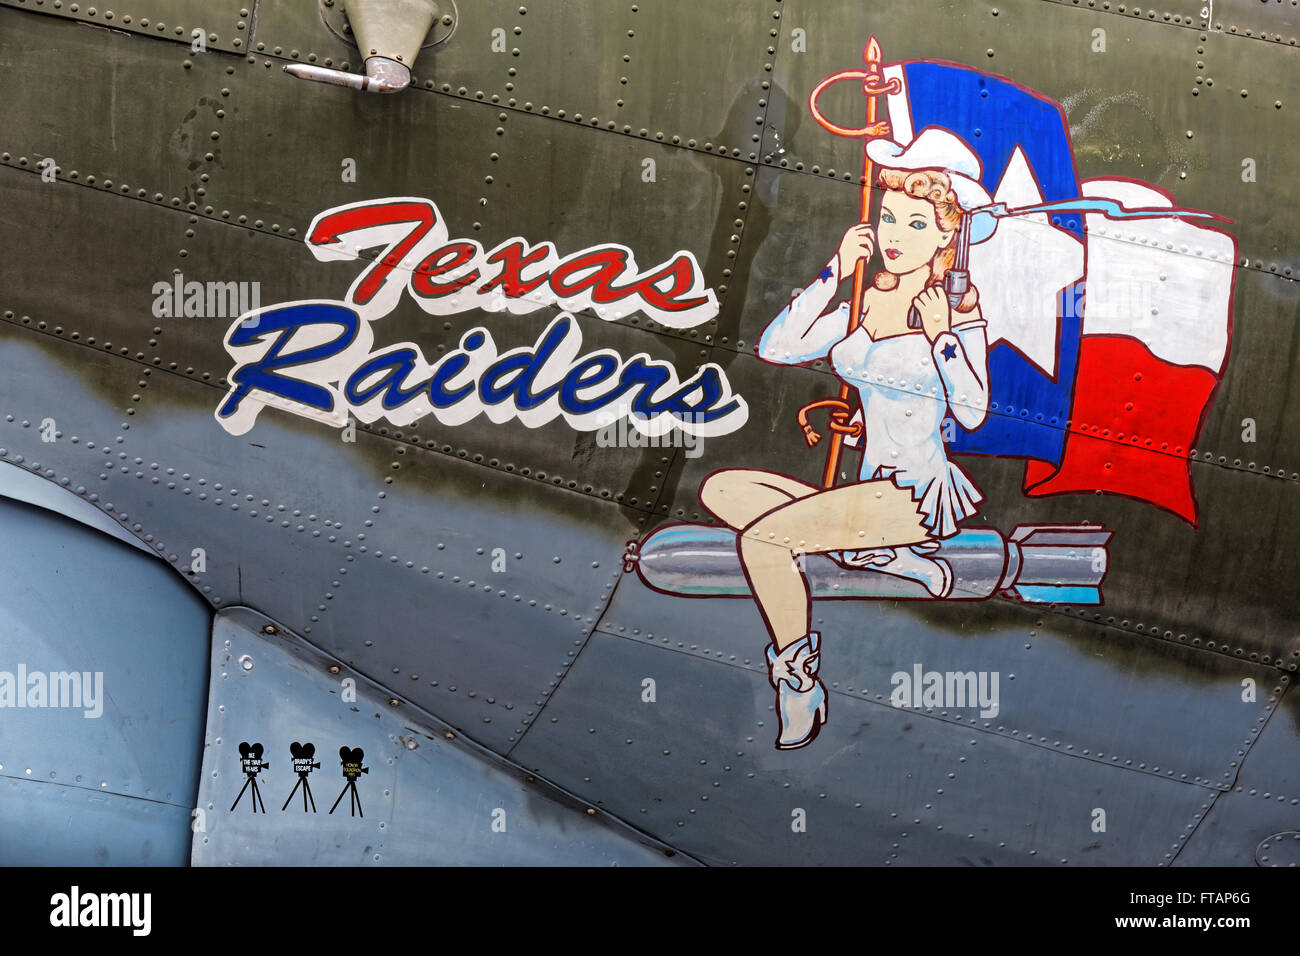 Boeing B-17 'Texas Raiders' Stock Photo